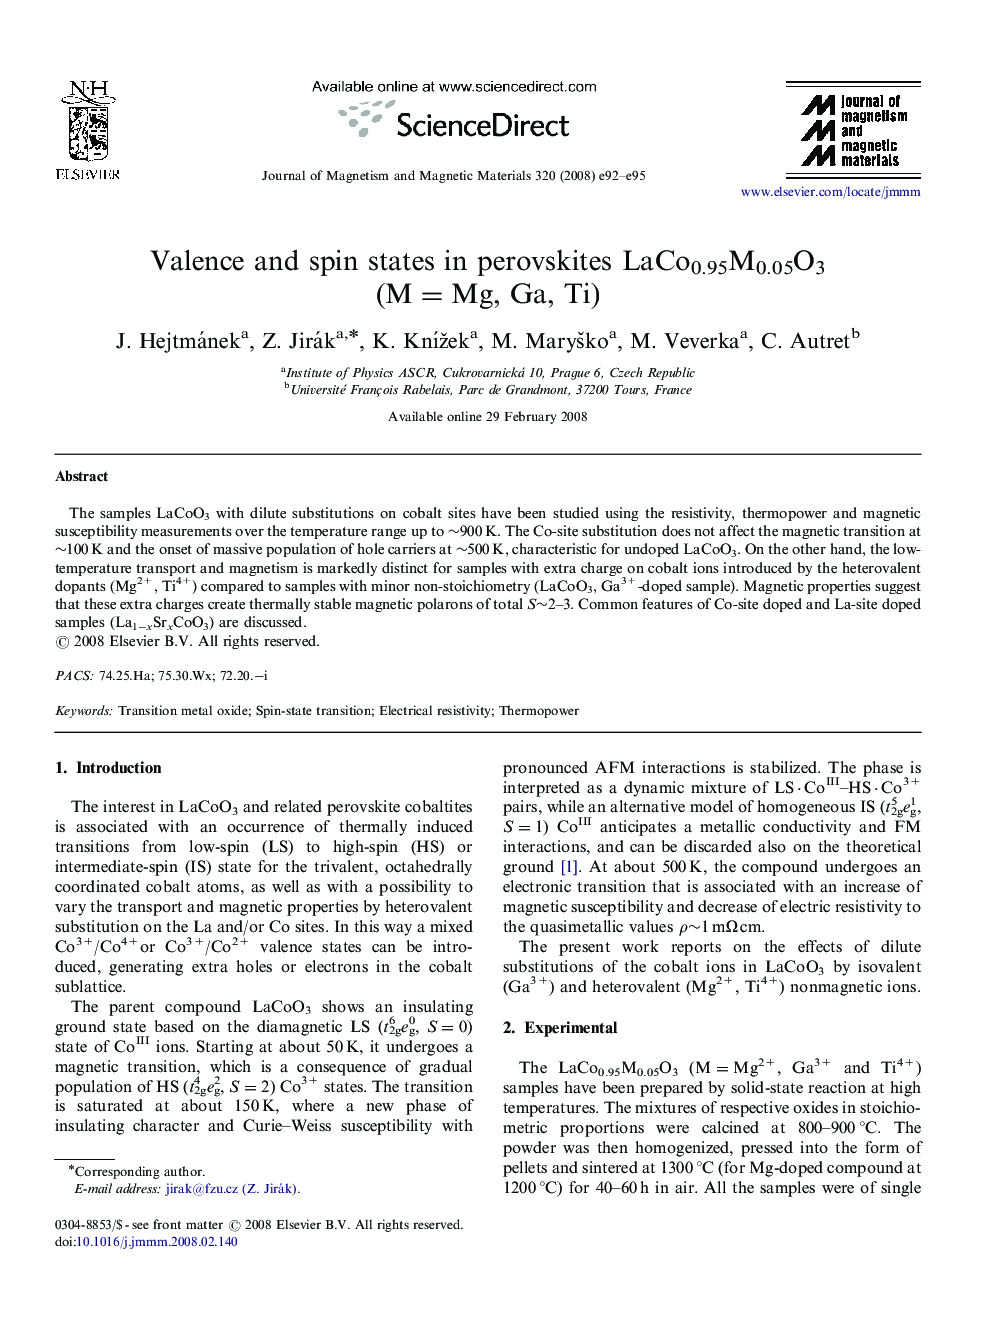 Valence and spin states in perovskites LaCo0.95M0.05O3 (M=Mg, Ga, Ti)